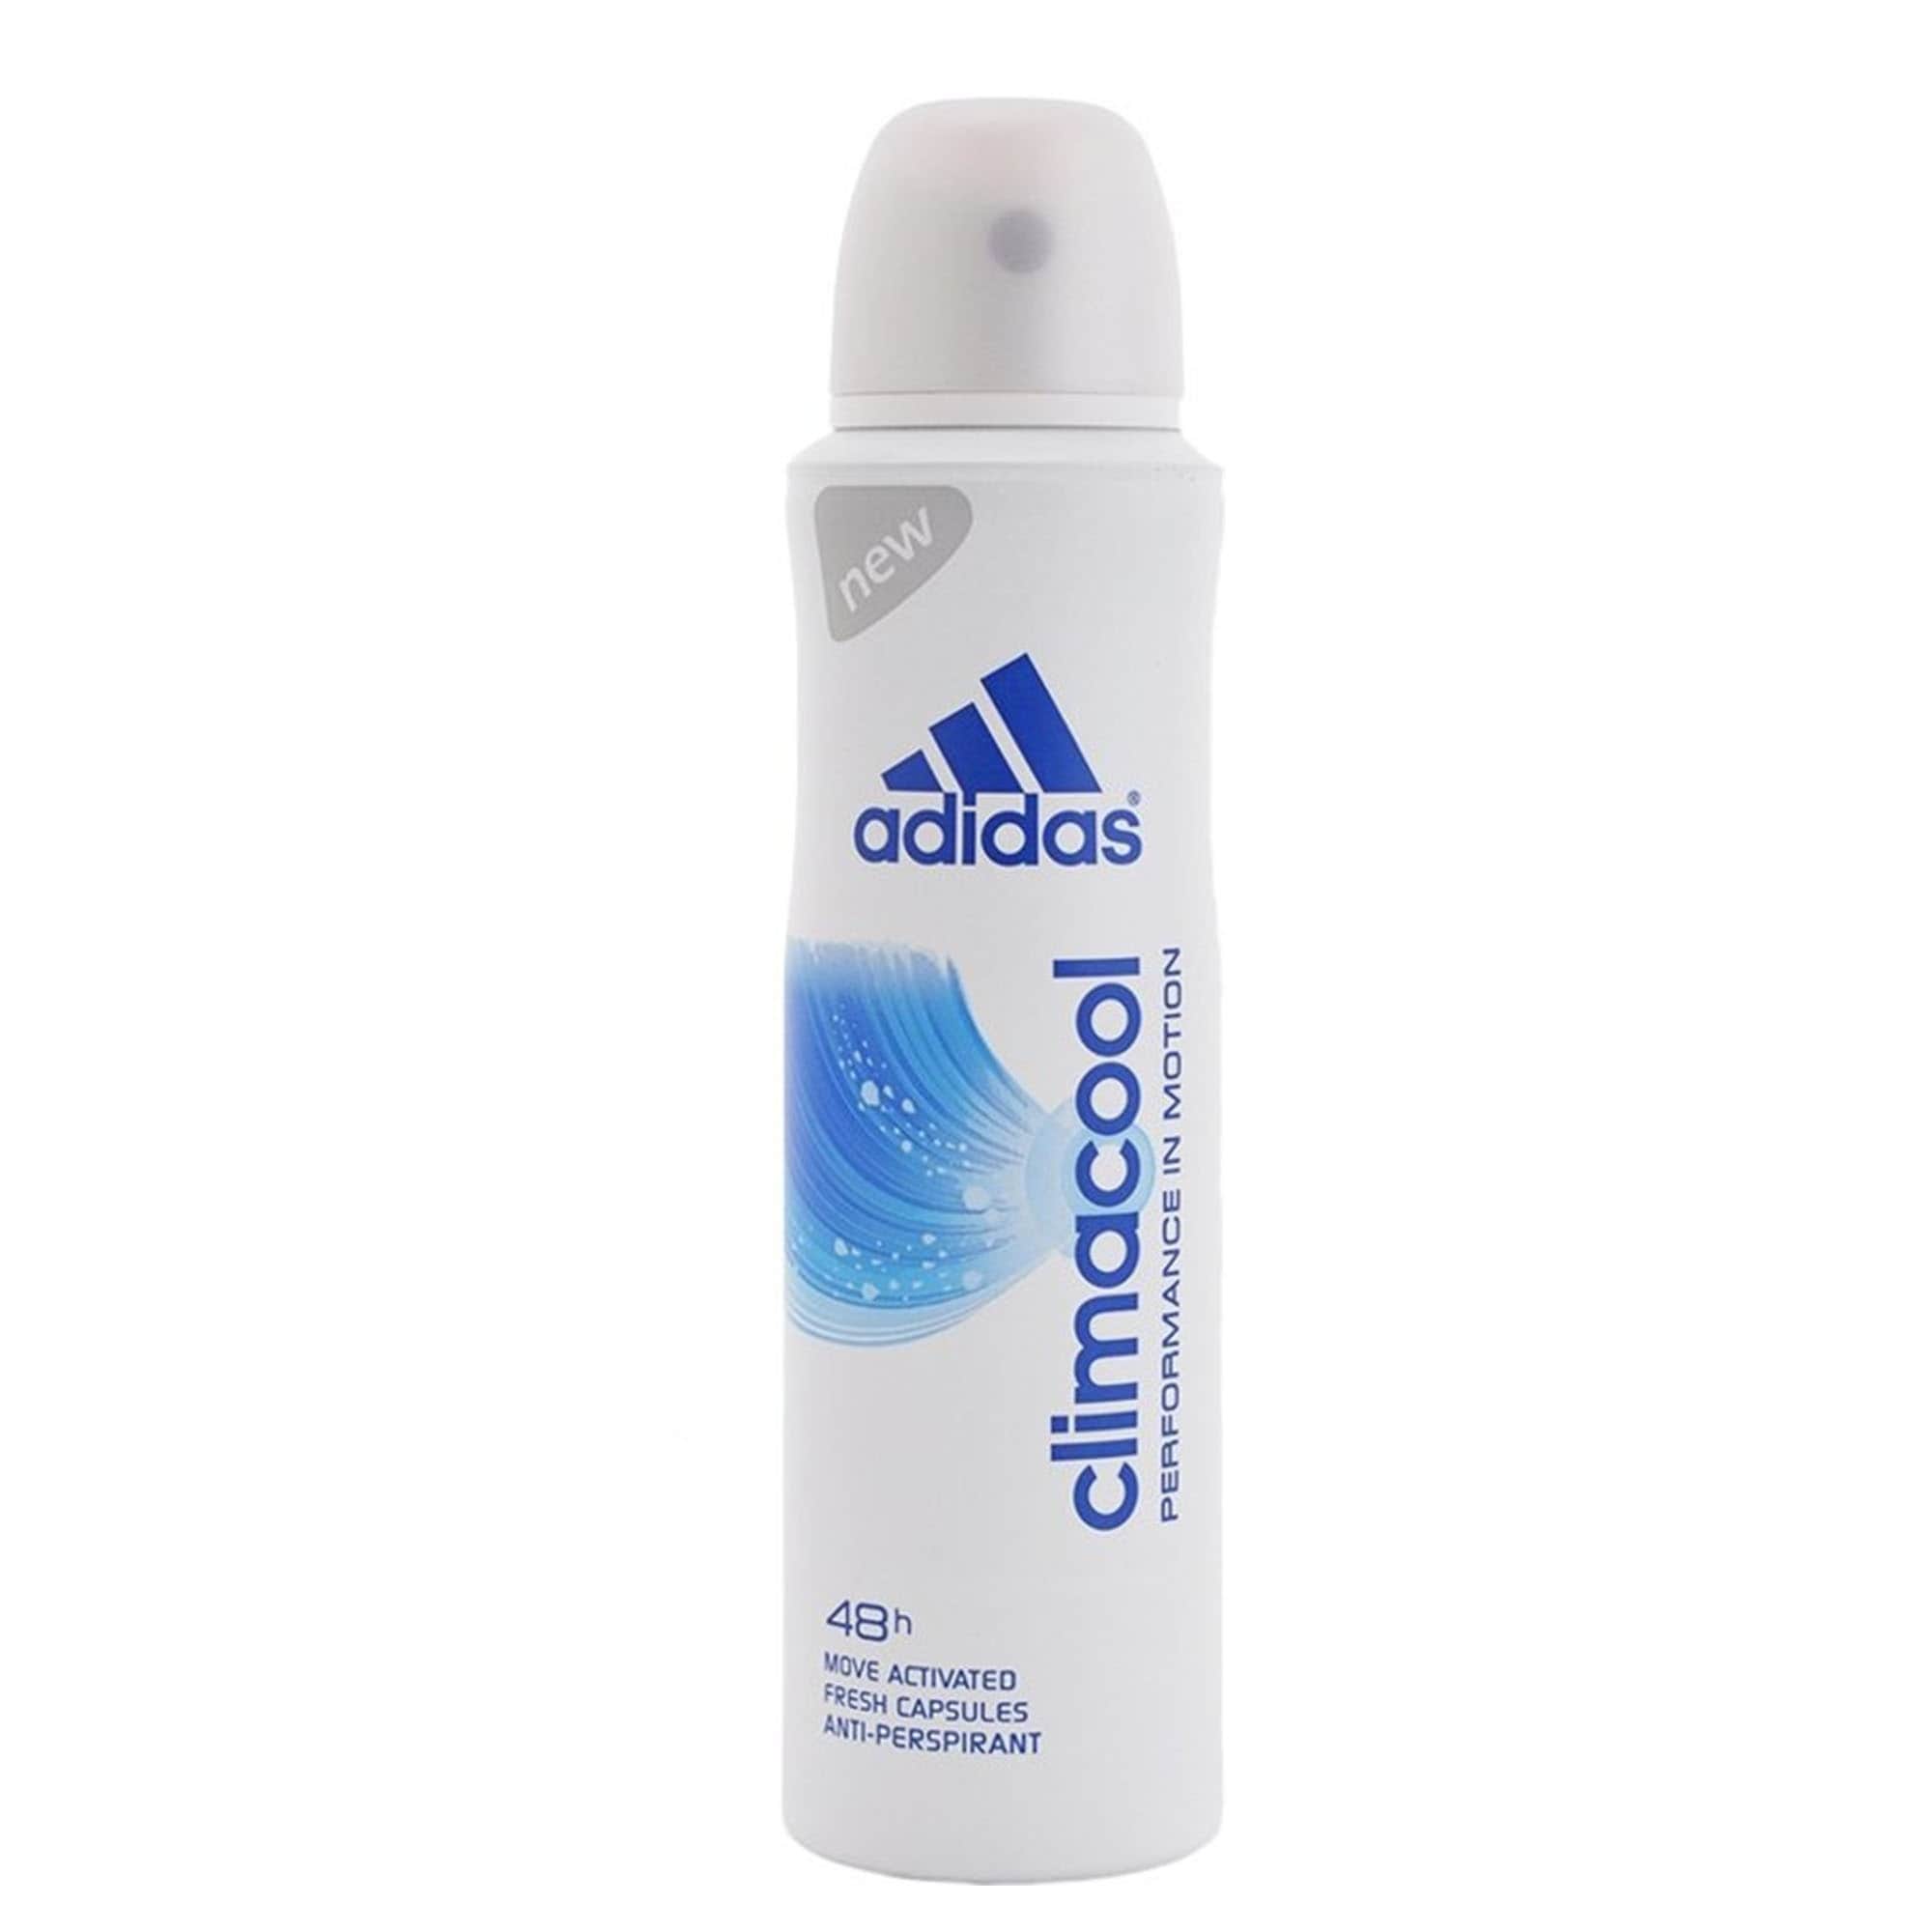 adidas climacool deodorant review